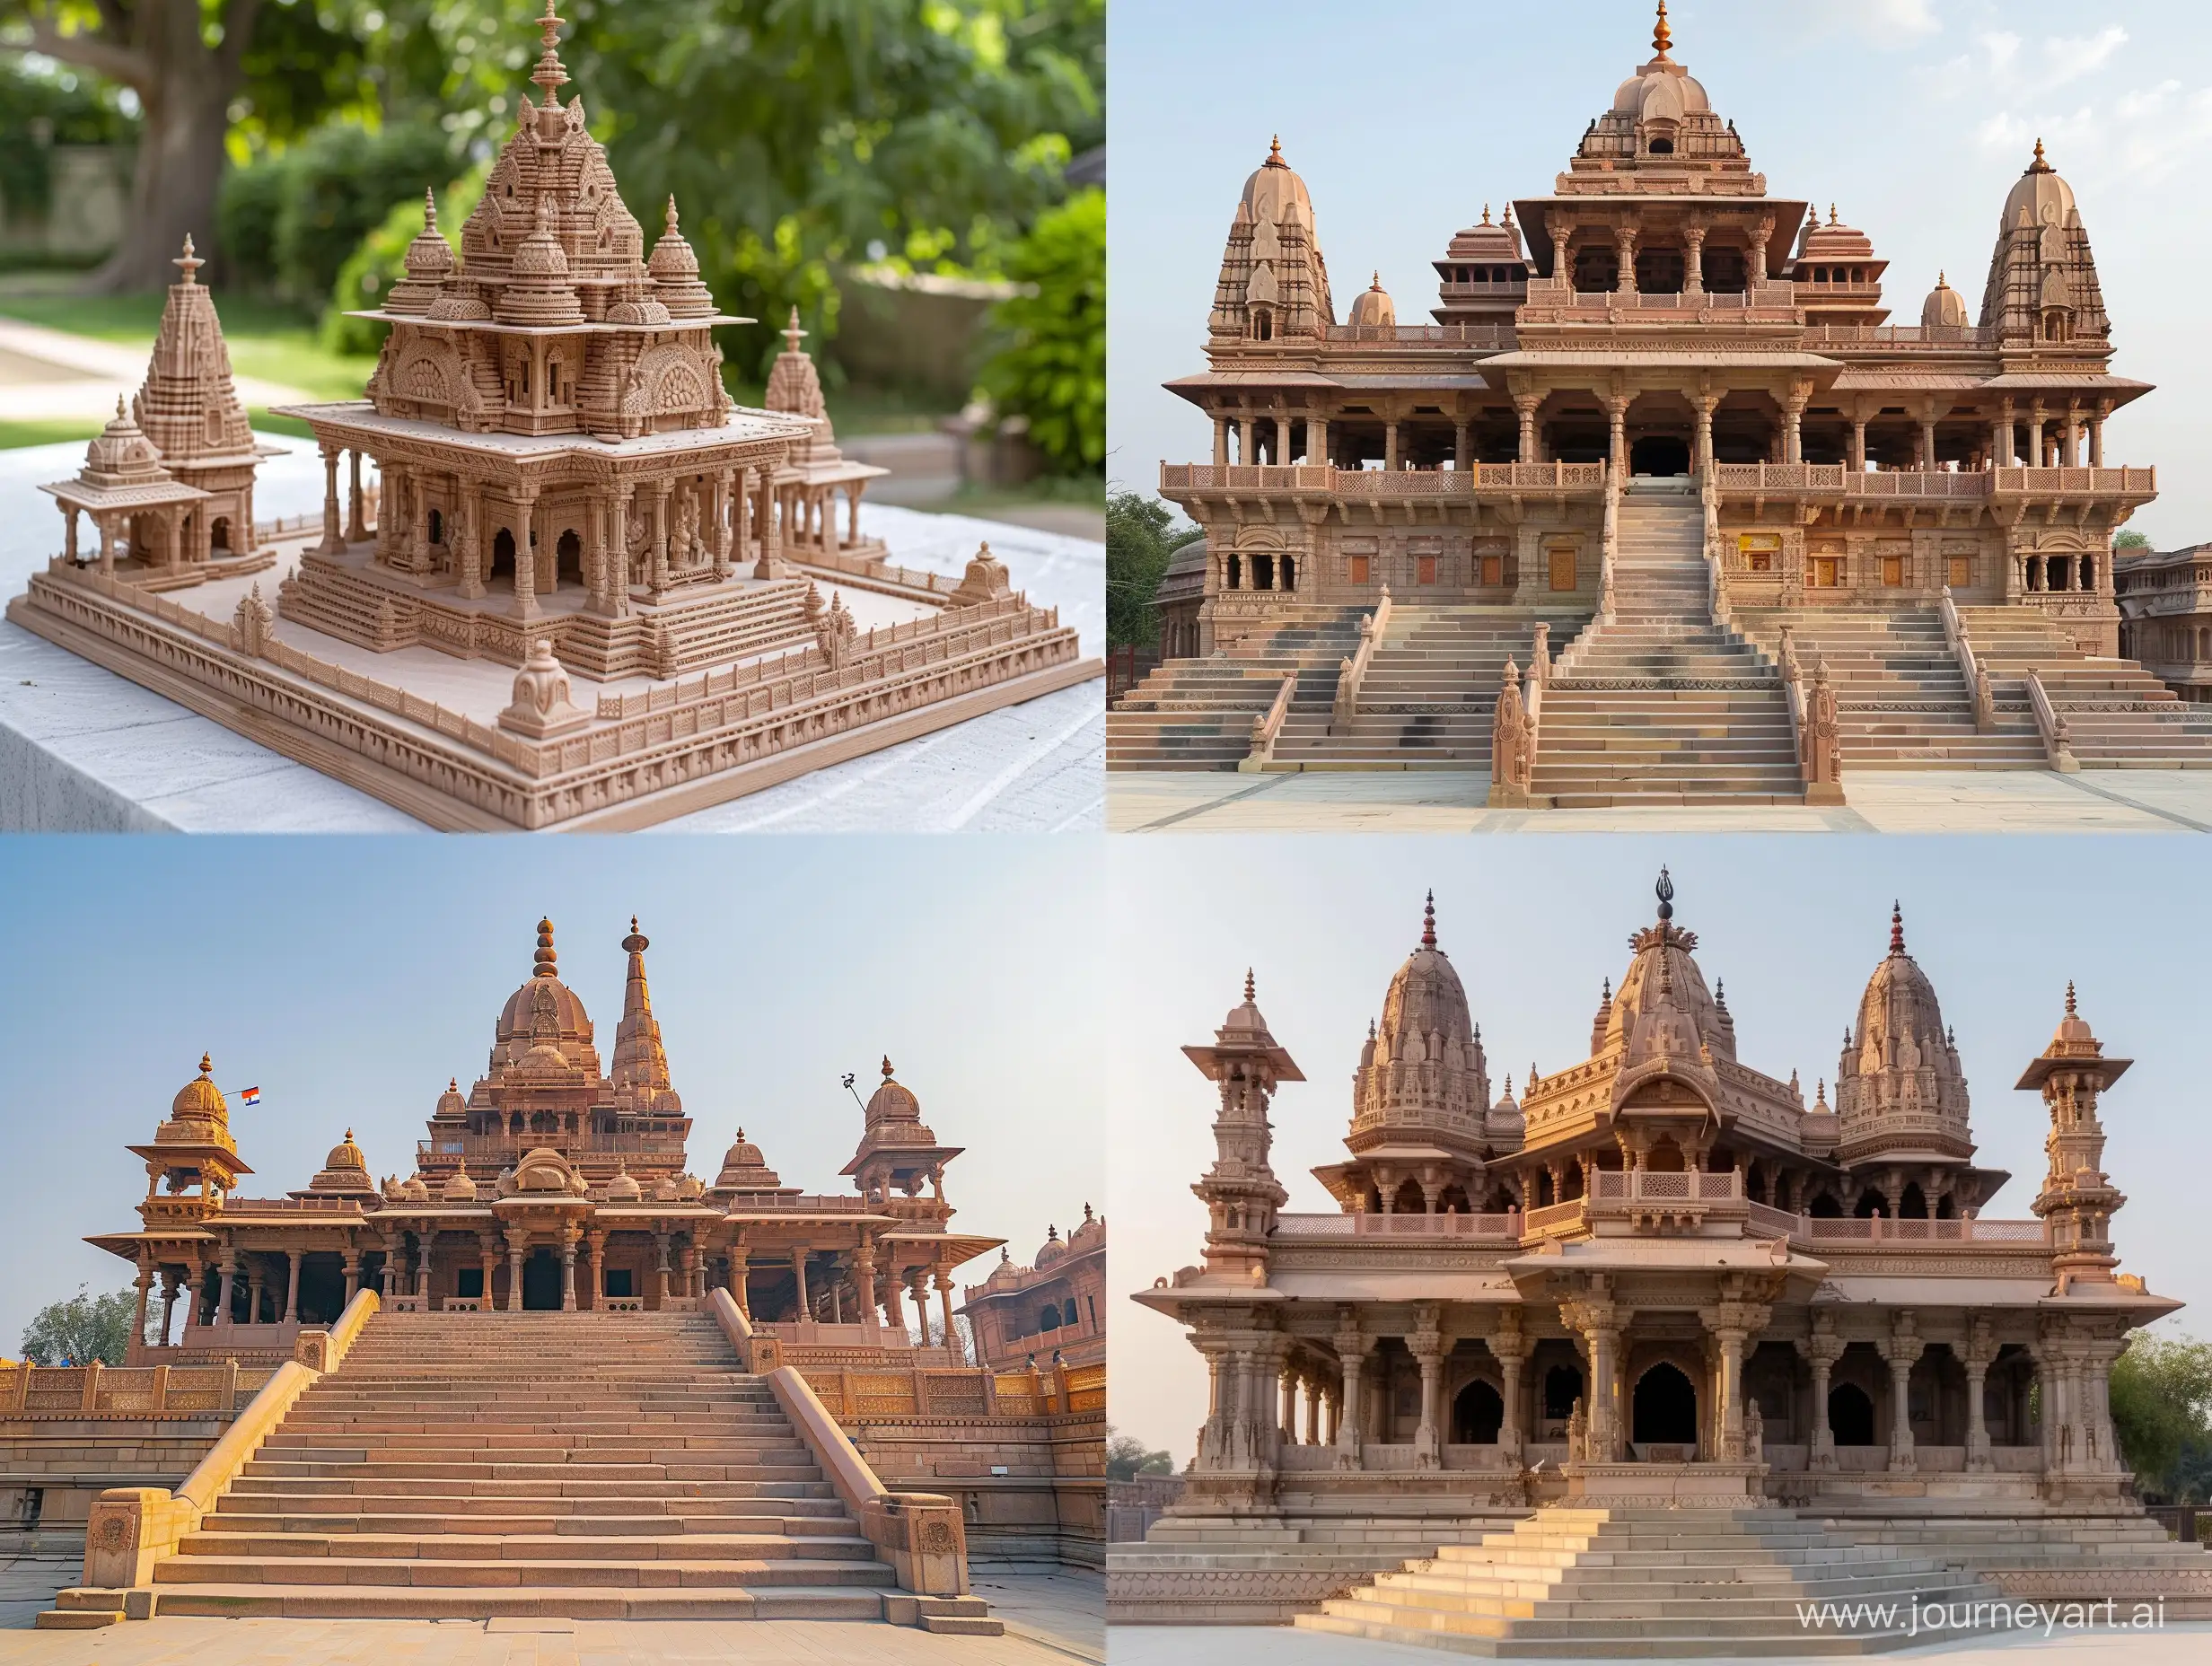 Exquisite-Ayodhya-Ram-Mandir-Images-with-43-Aspect-Ratio-Version-6